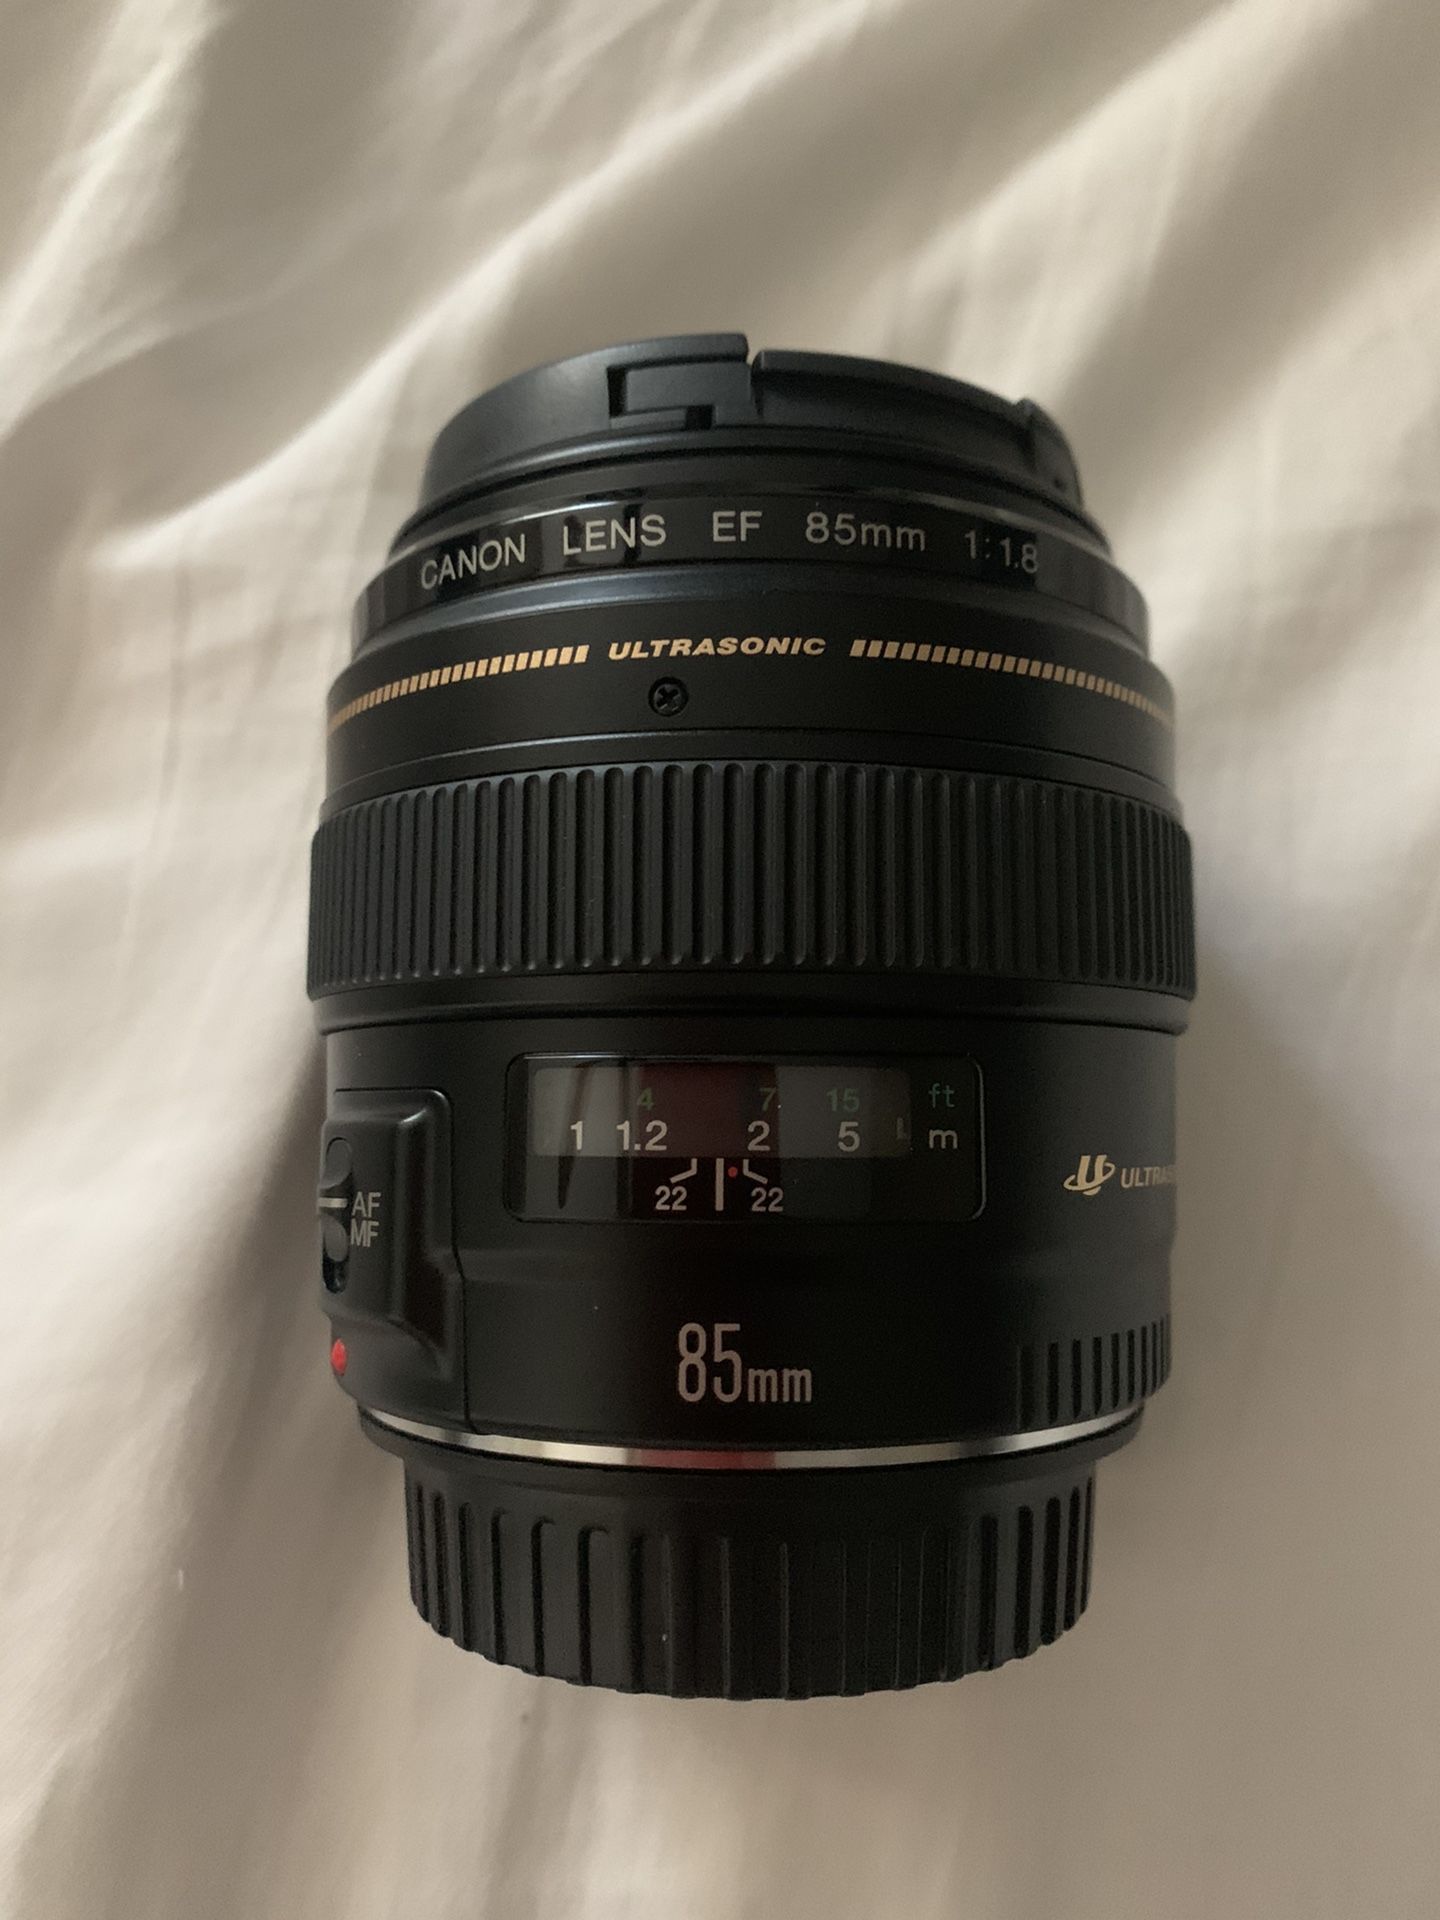 Canon EF 85mm f 1.8 USM medium telephoto lens